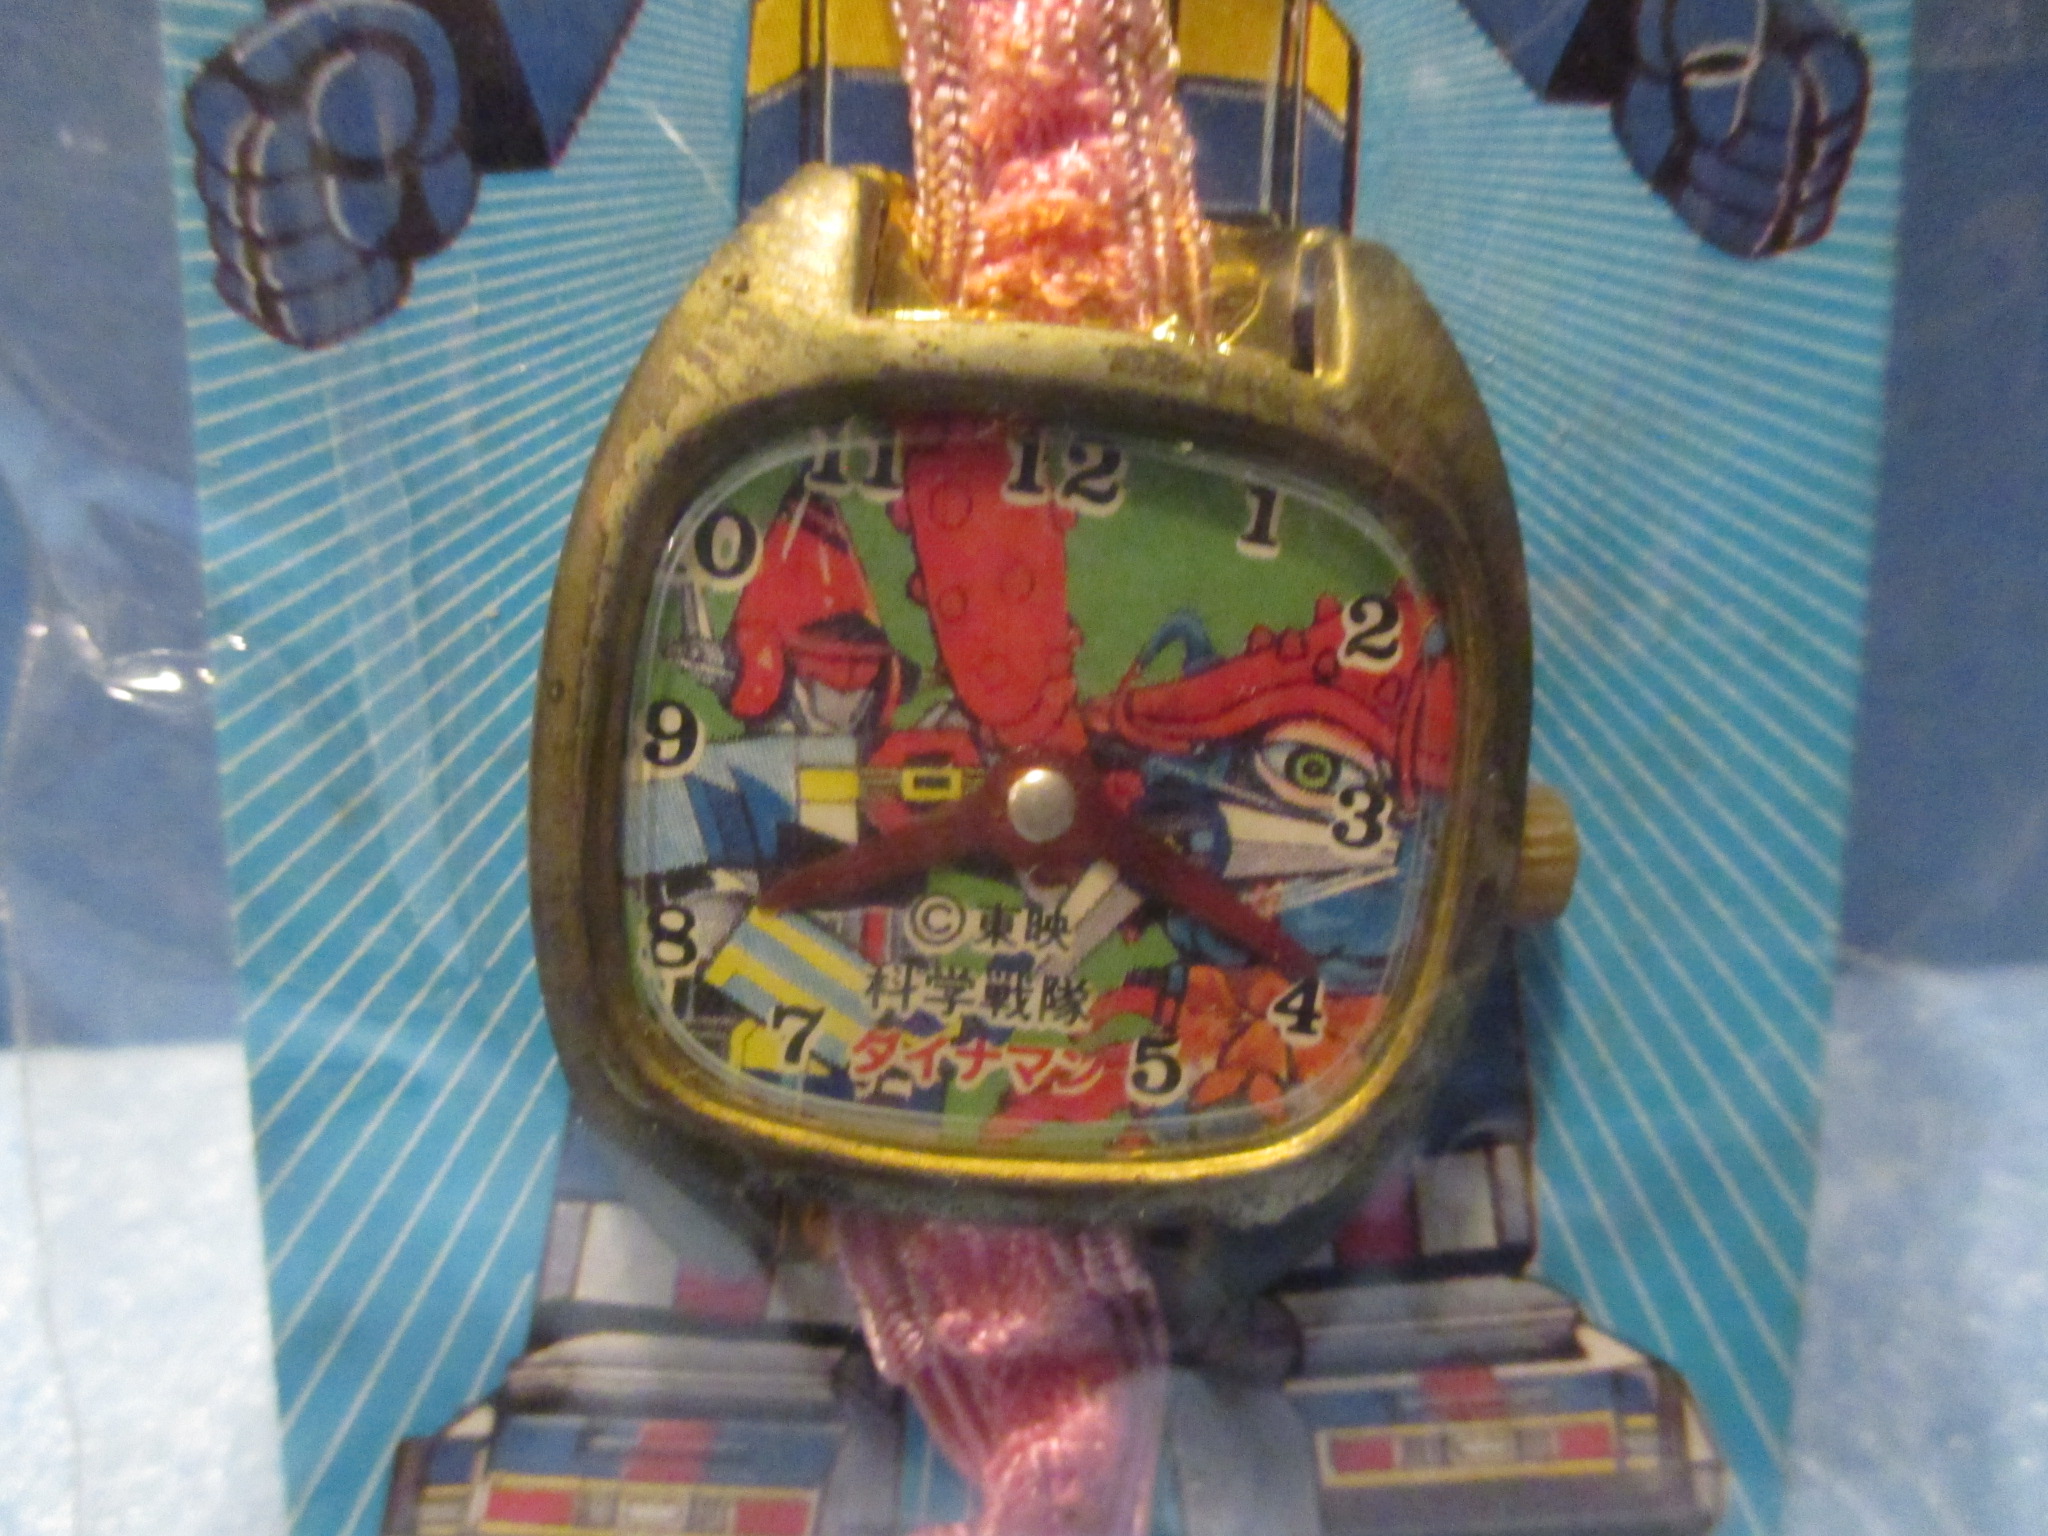  Showa Retro Scientific Squadron Dynaman наручные часы игрушка часы [ б/у товар ]